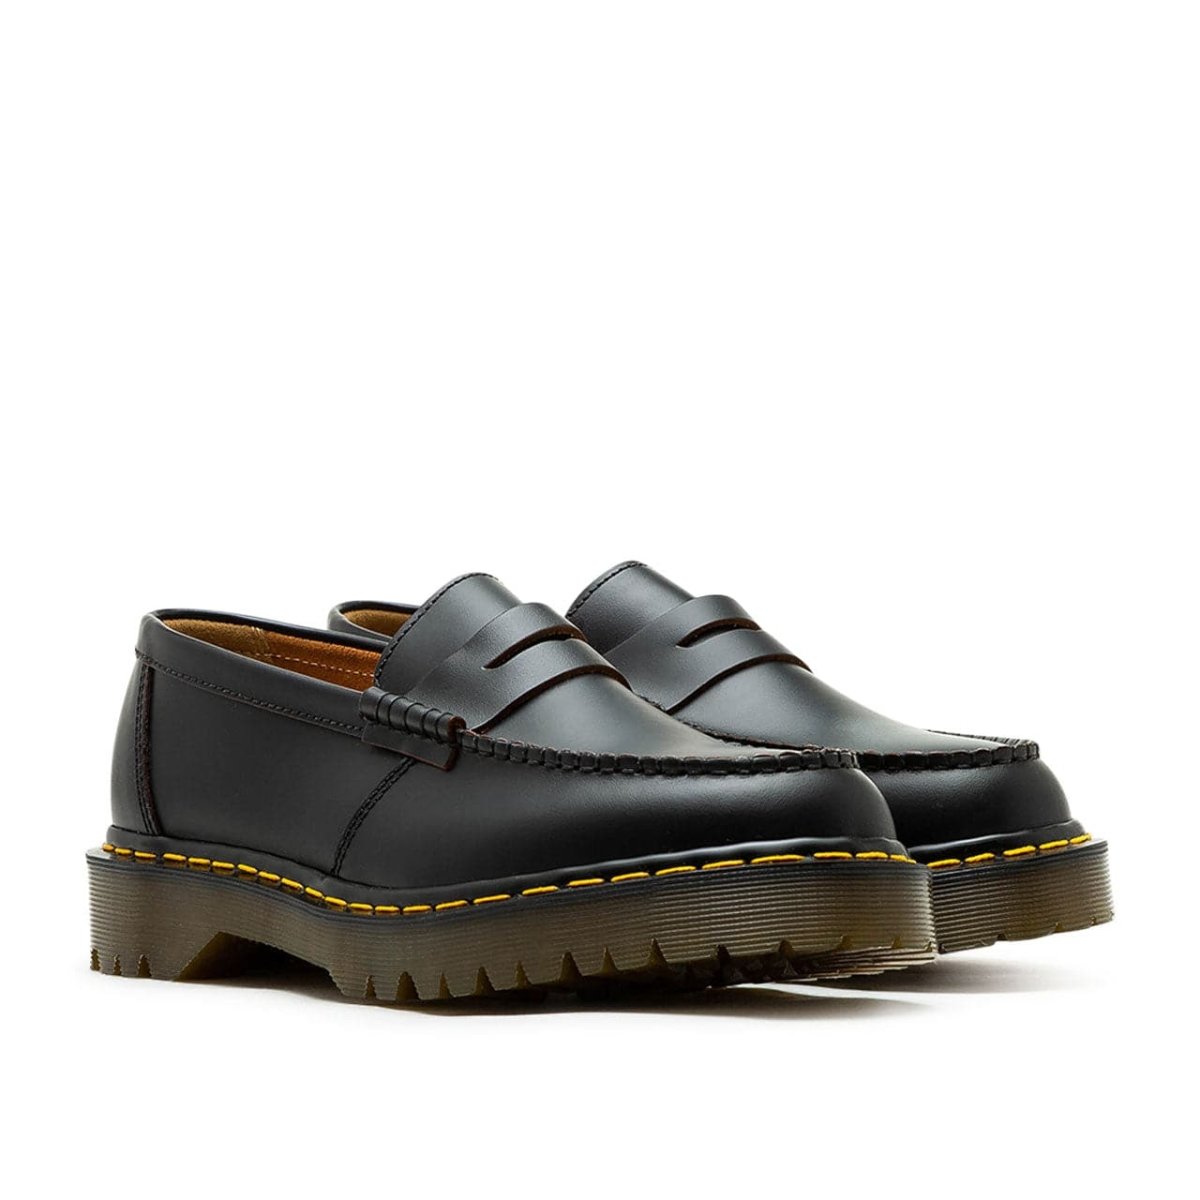 Dr. Martens Penton Bex Leather Loafers (Schwarz)  - Allike Store